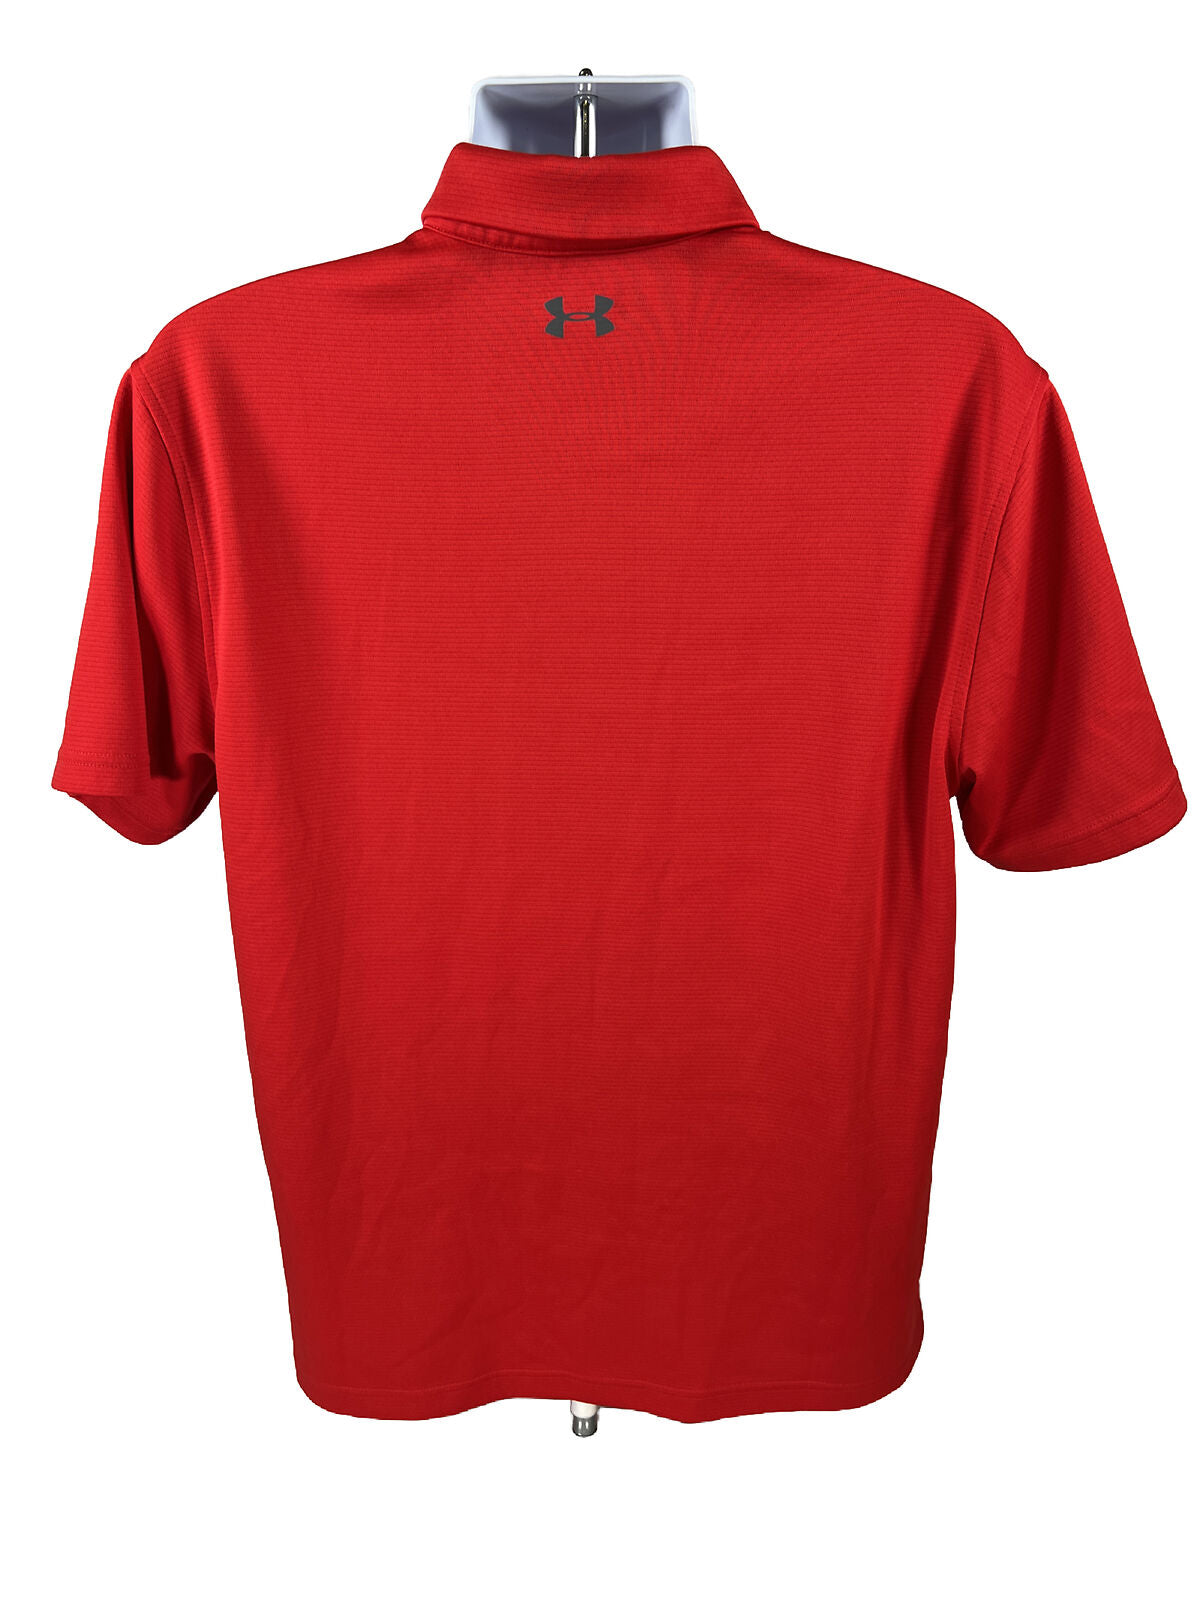 Under Armour Men's Red Short Sleeve Heatgear Polo Shirt - L